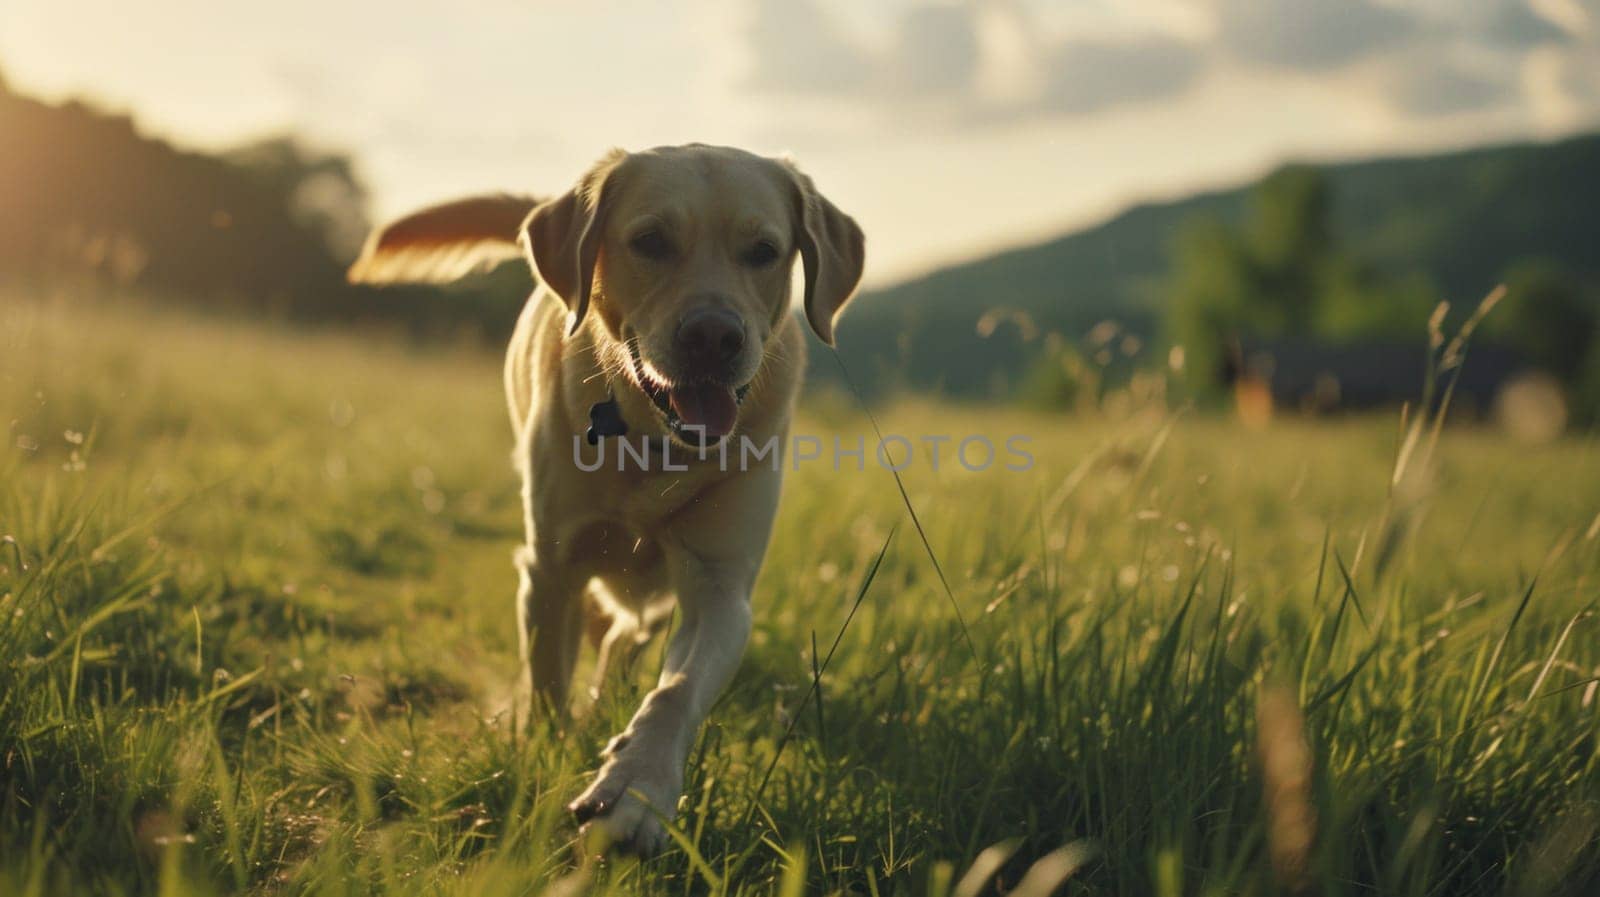 A dog running through a field of tall grass with sun shining